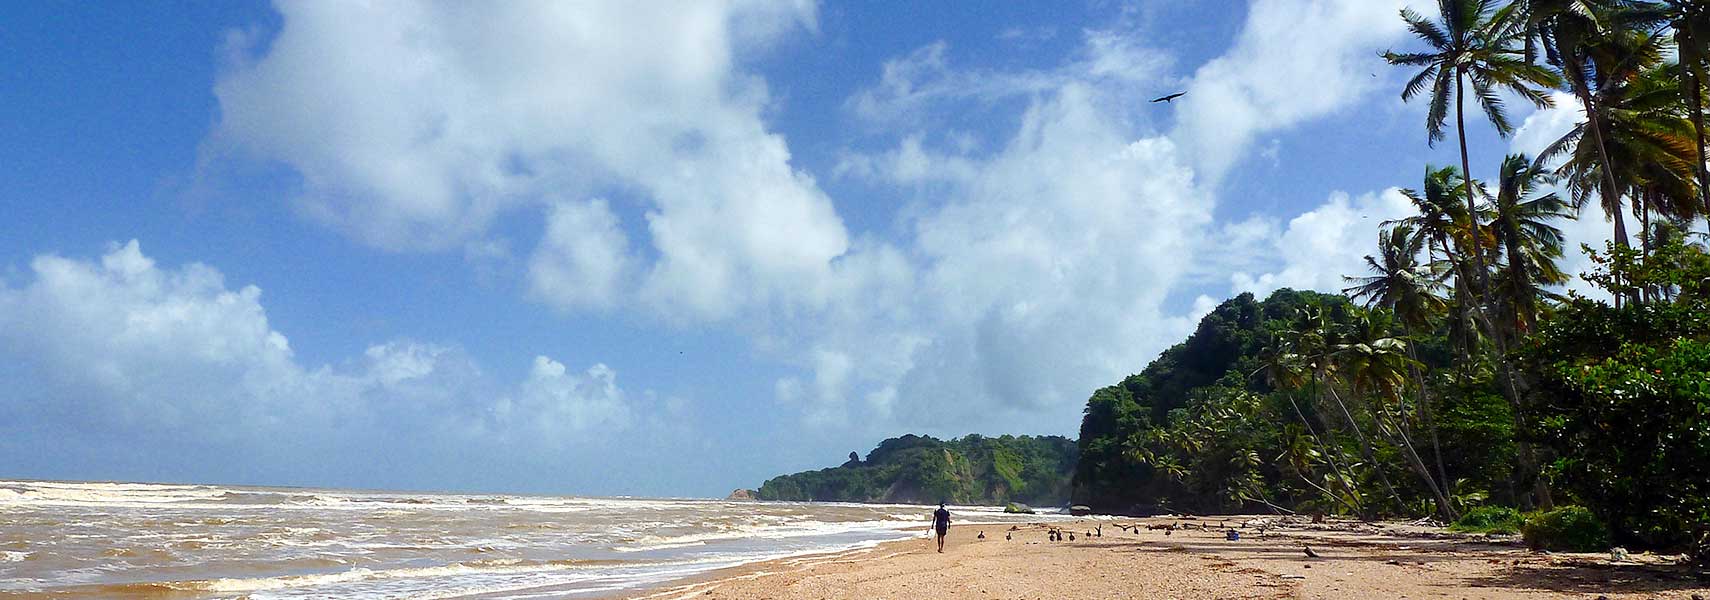 Trinidad's east coast at the Atlantic Ocean